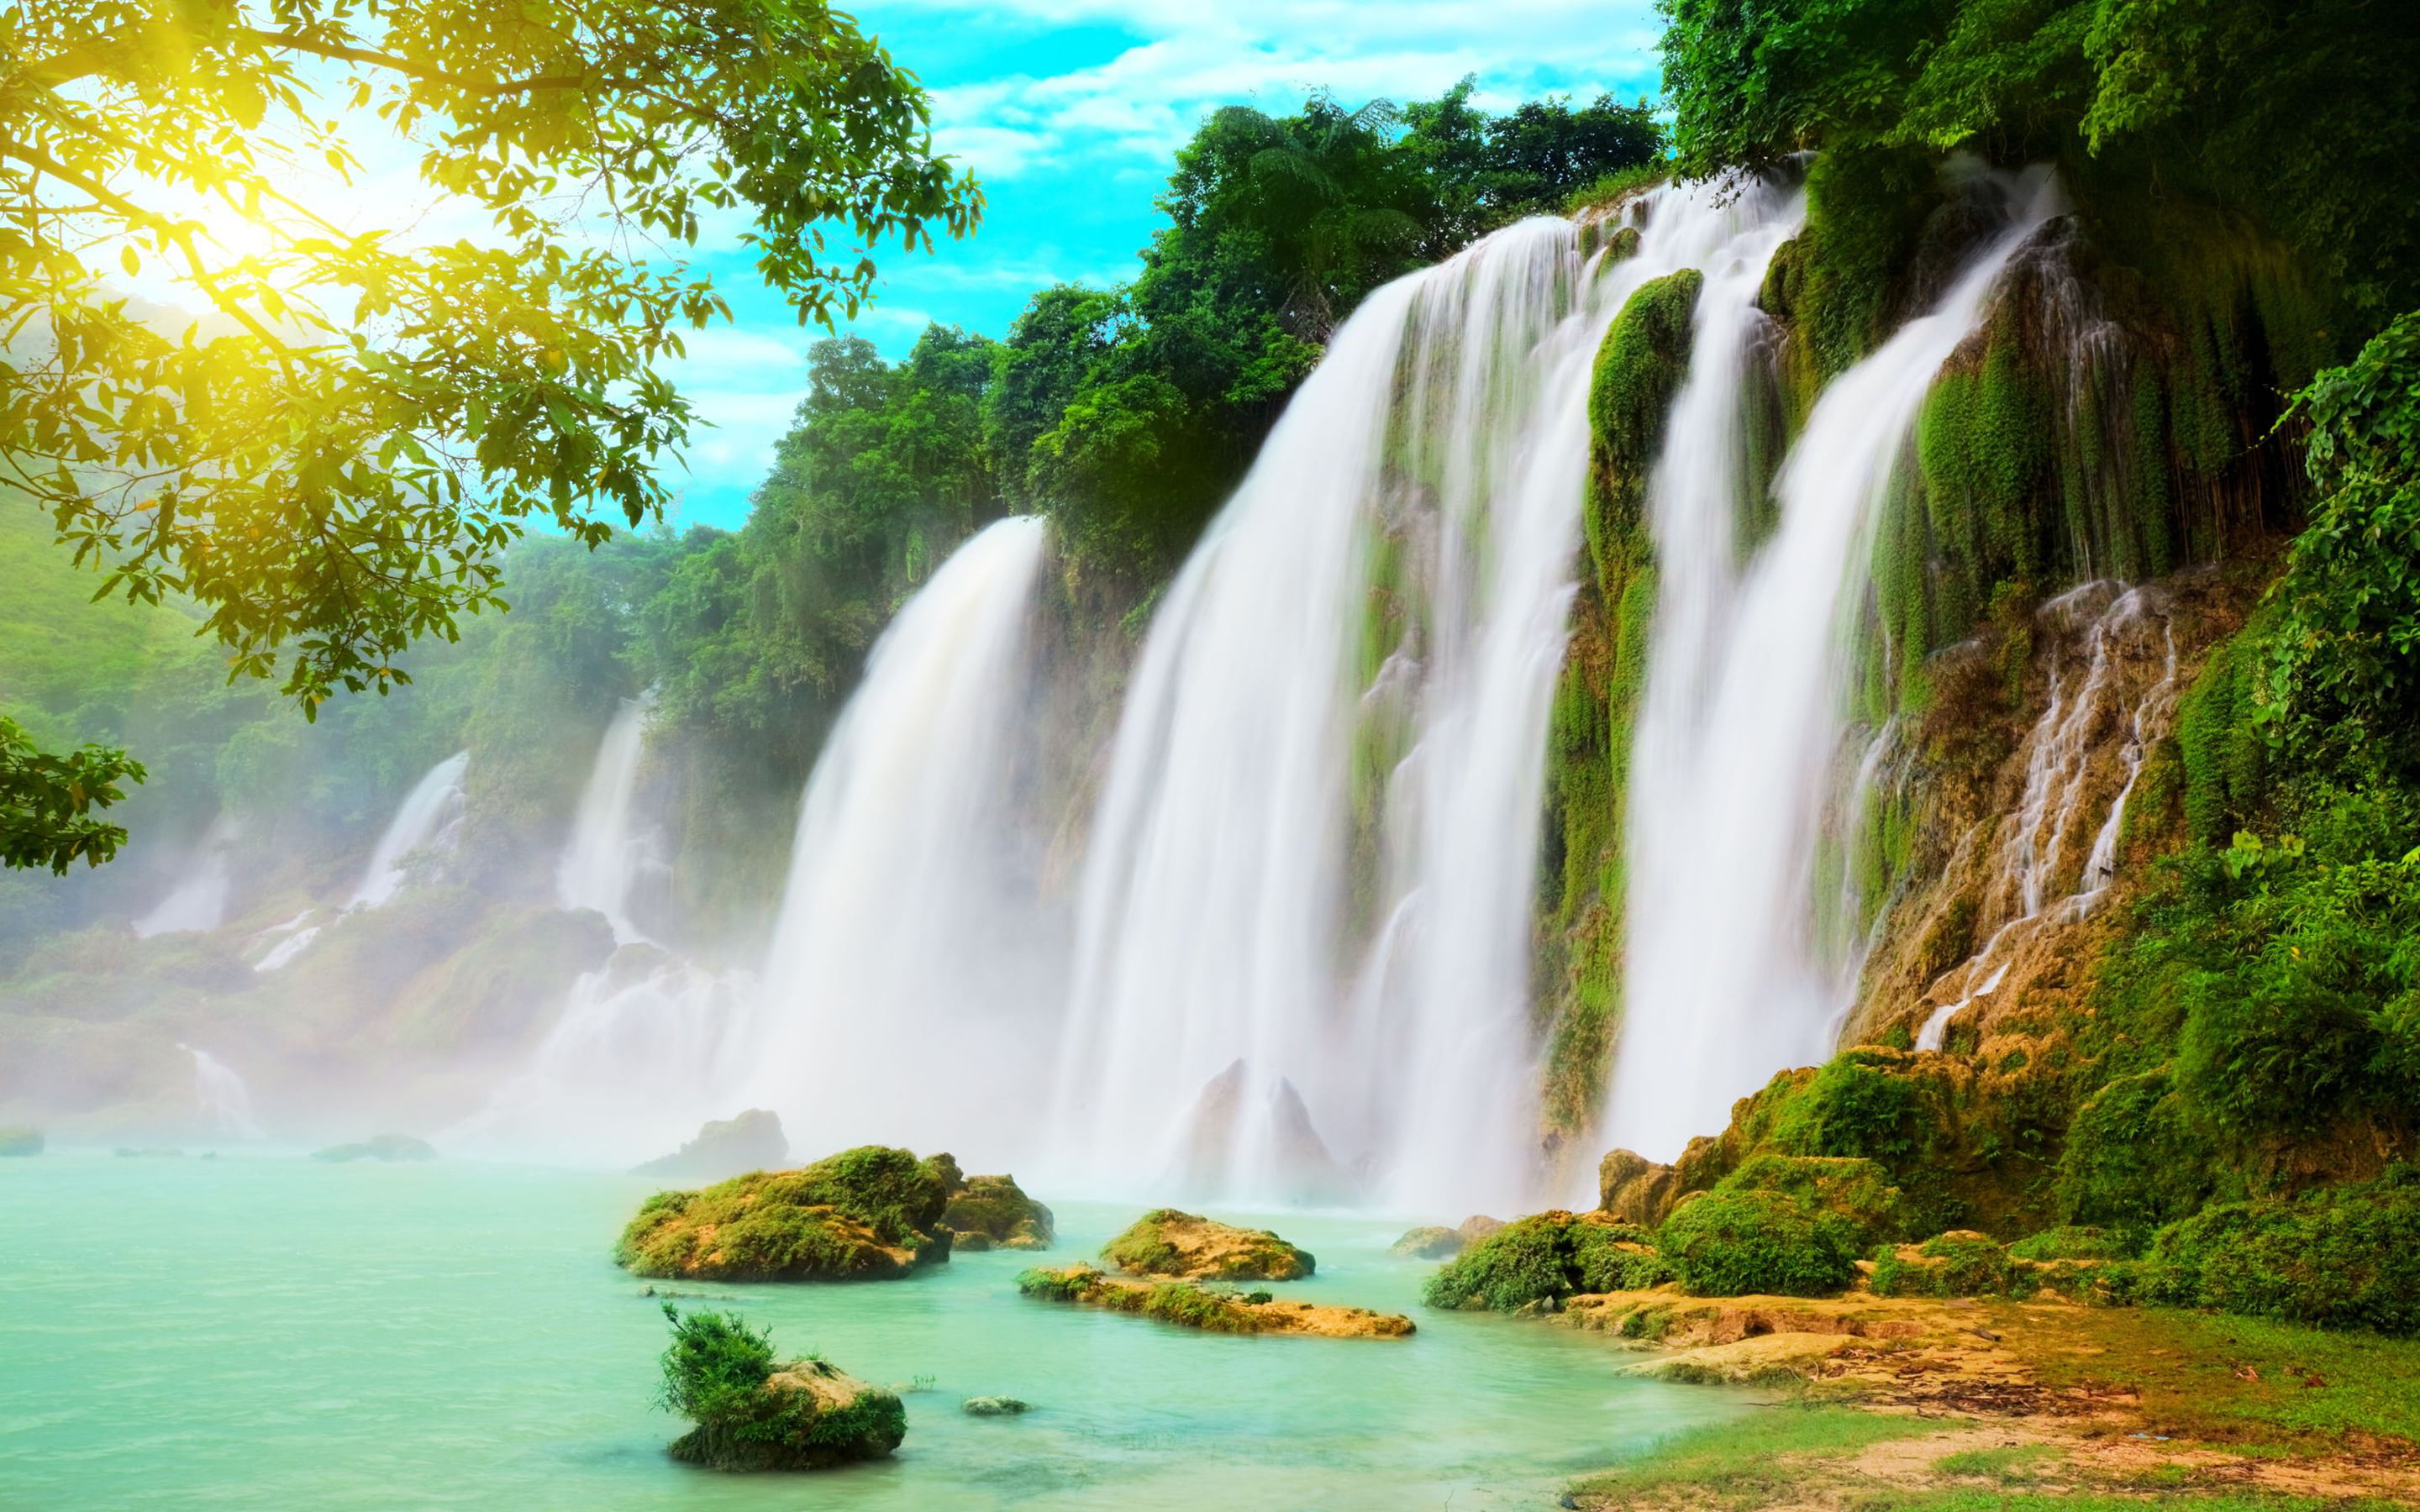 Ba Bể Lake & Ban Gioc Waterfall North Hanoi Desktop Wallpaper Hd 2800×800